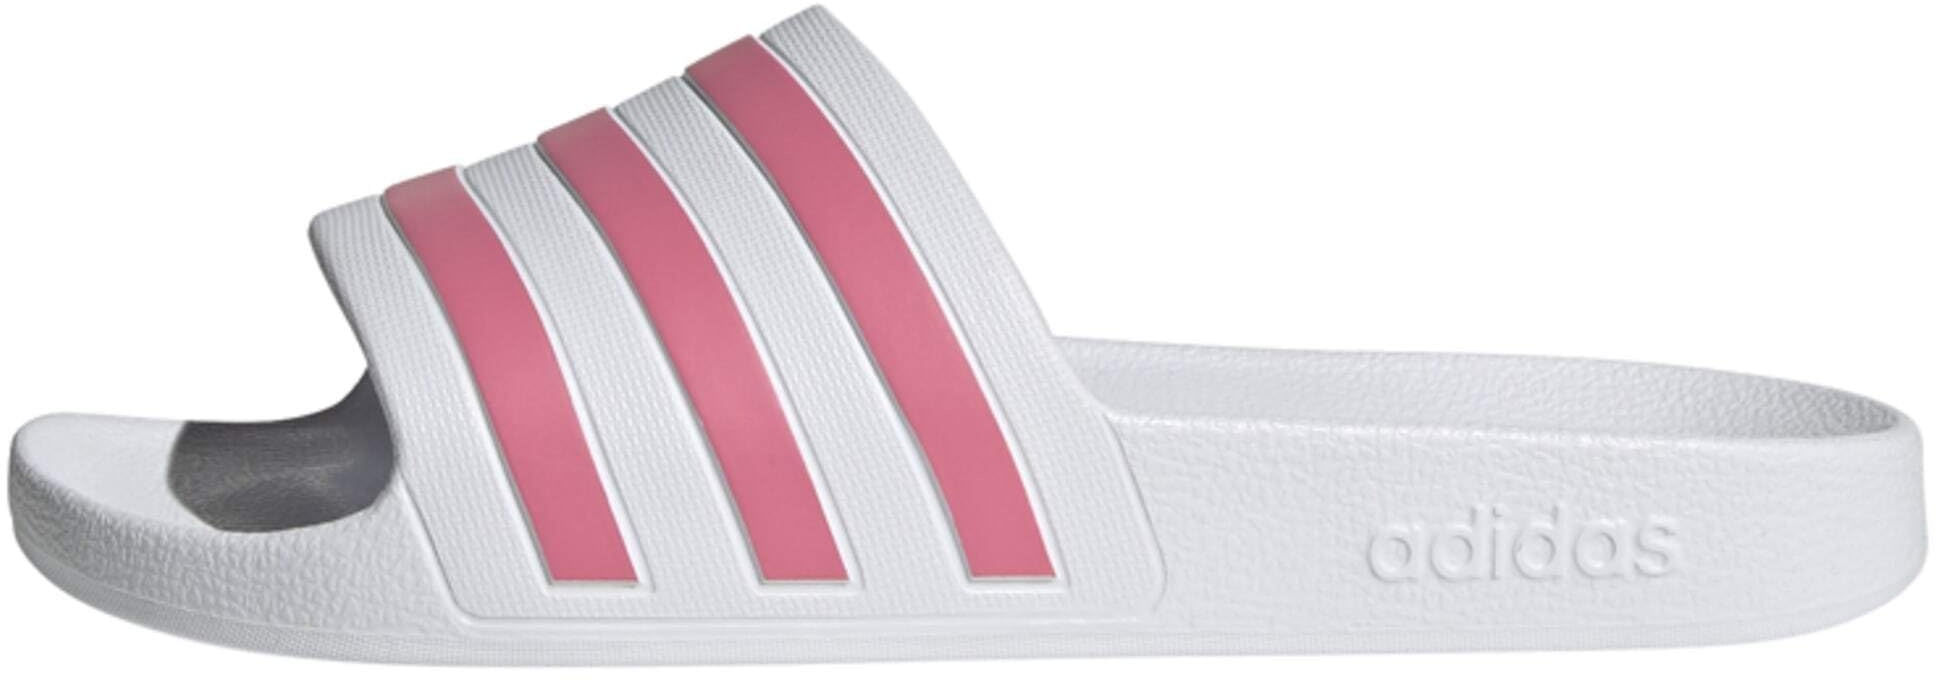 adidas Damen Adilette Aqua Slide Sandal, Bianco Ftwbla Tonros Ftwbla, 37 EU